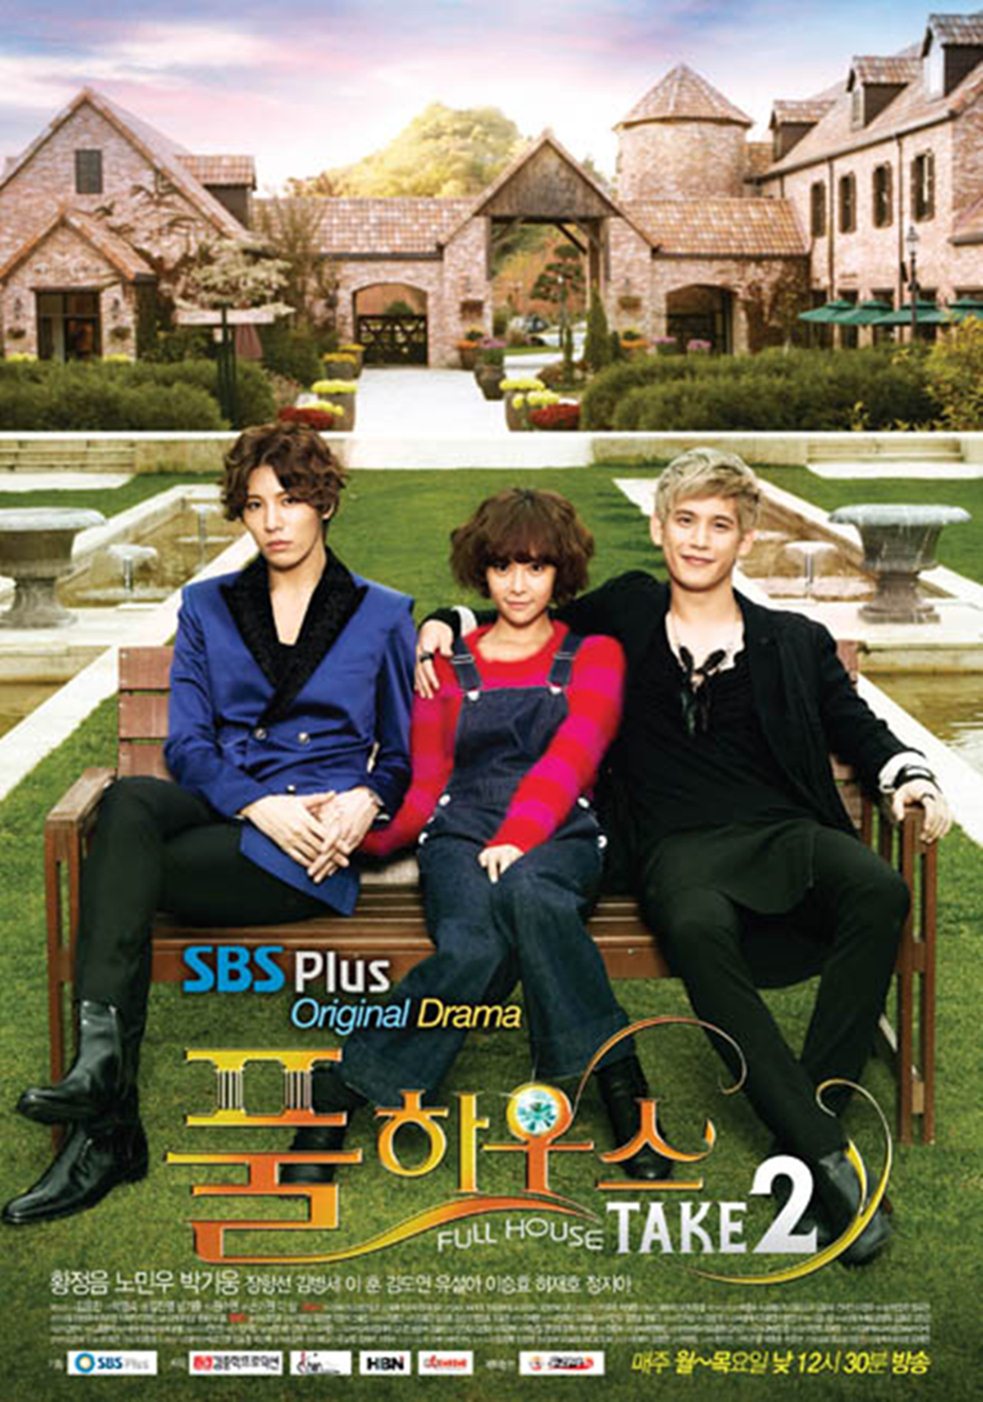 OST Korean Drama : OST Full House Take 2